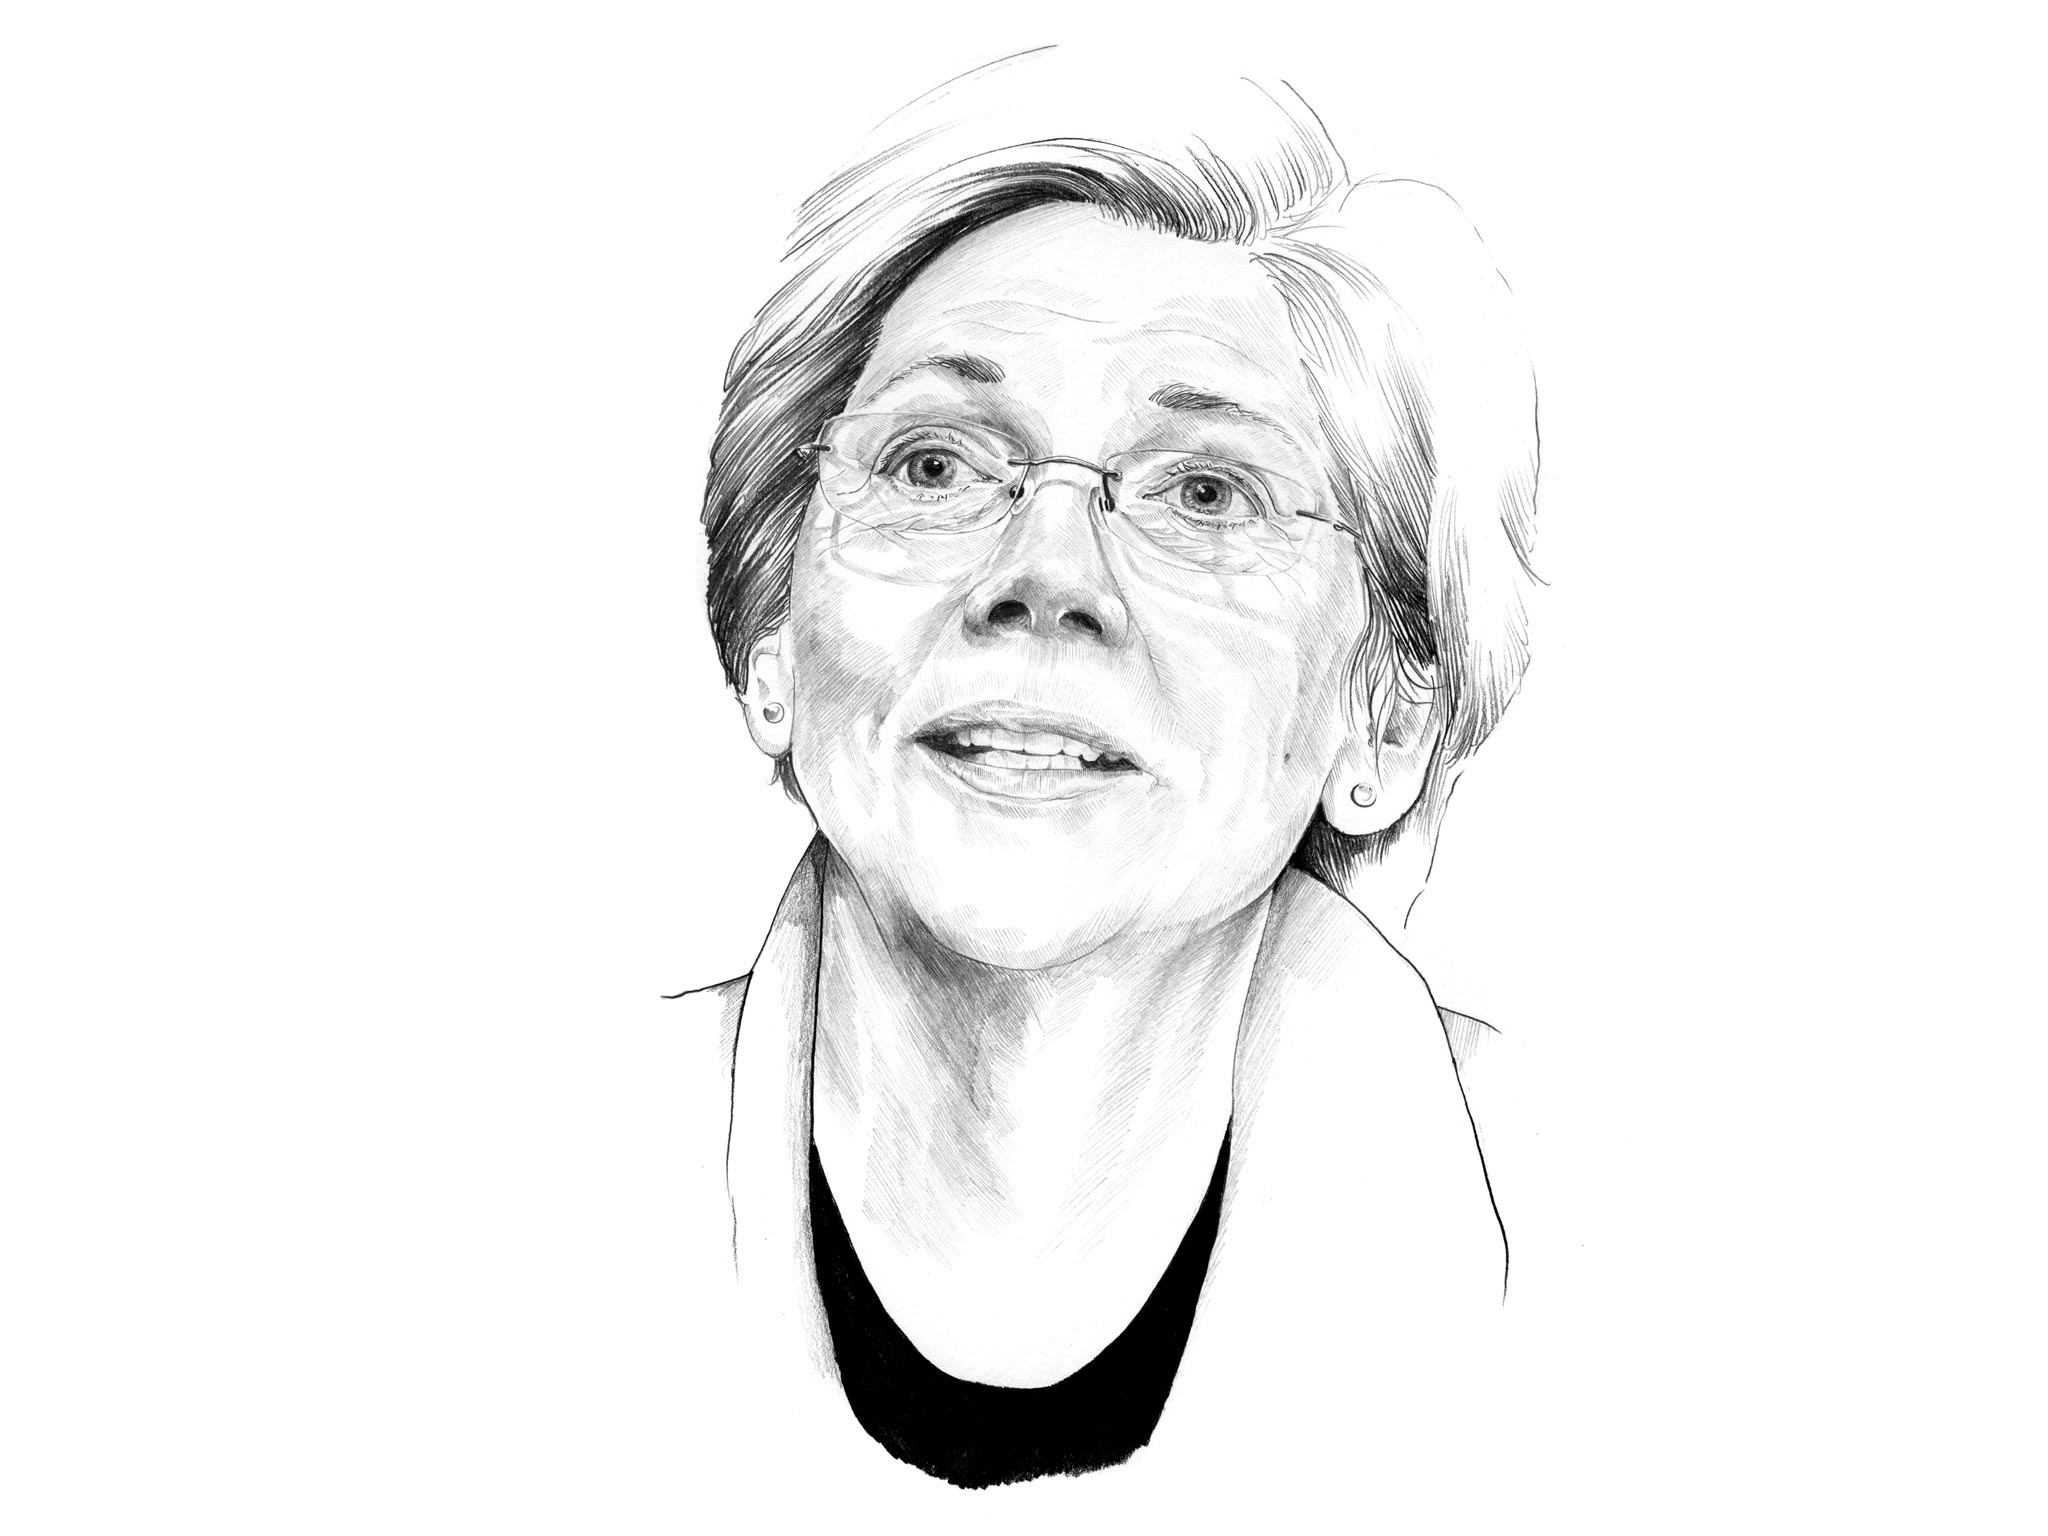 Elizabeth Warren, who launched her political career in 2012